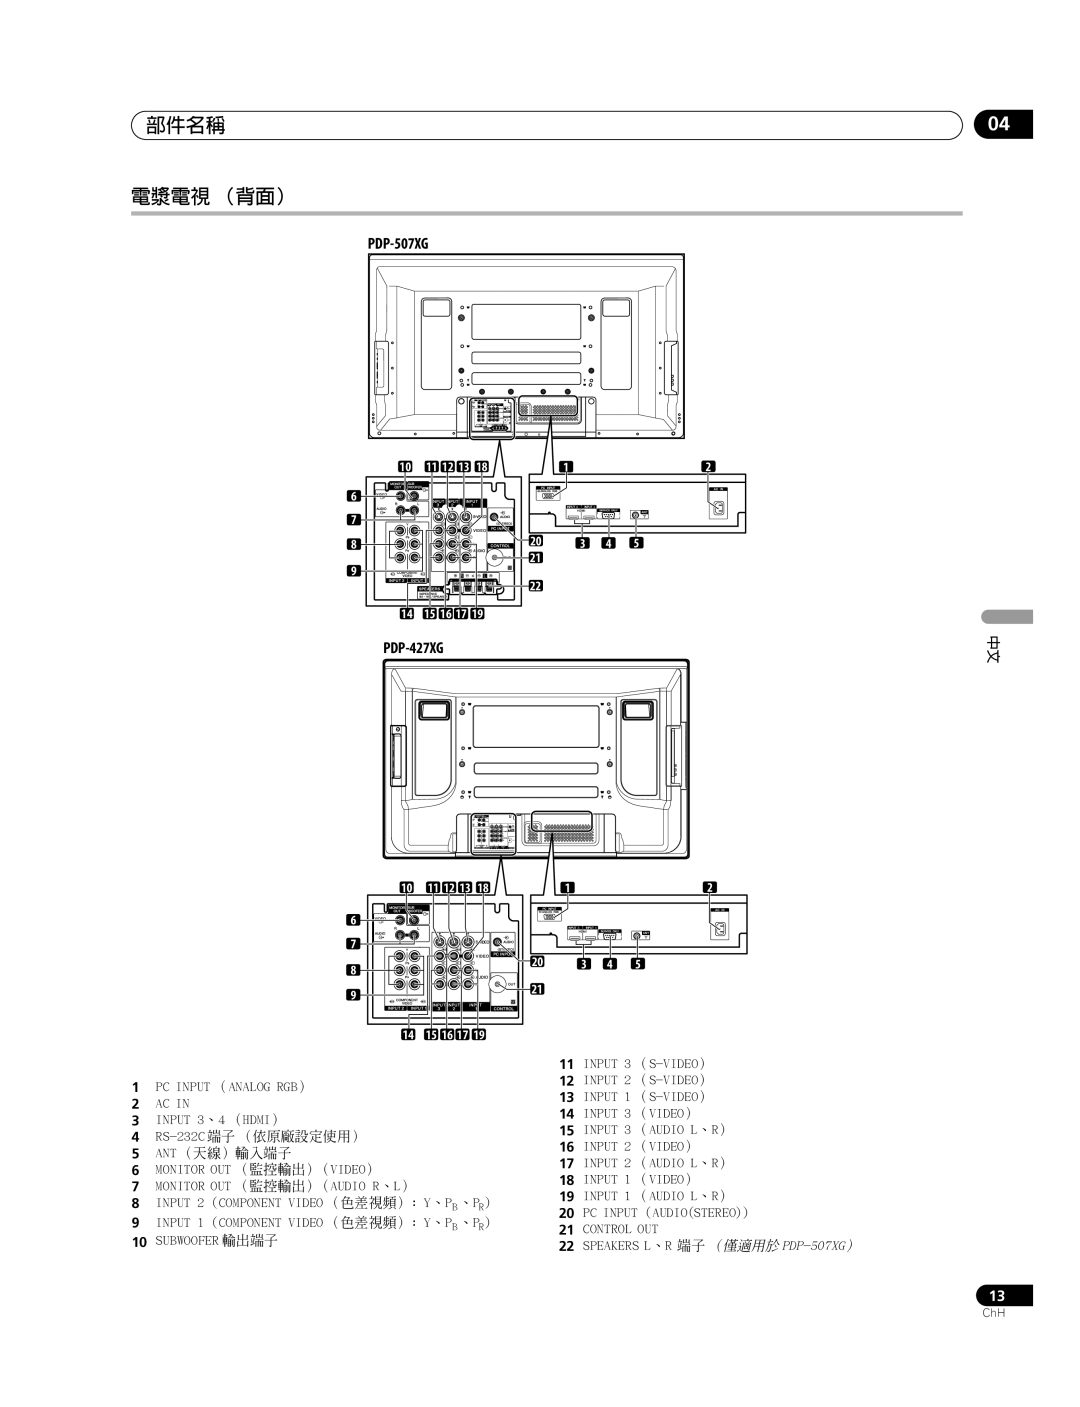 Pioneer PDP-507XG manual 部件名稱 電漿電視 （背面）, PDP-427XG 